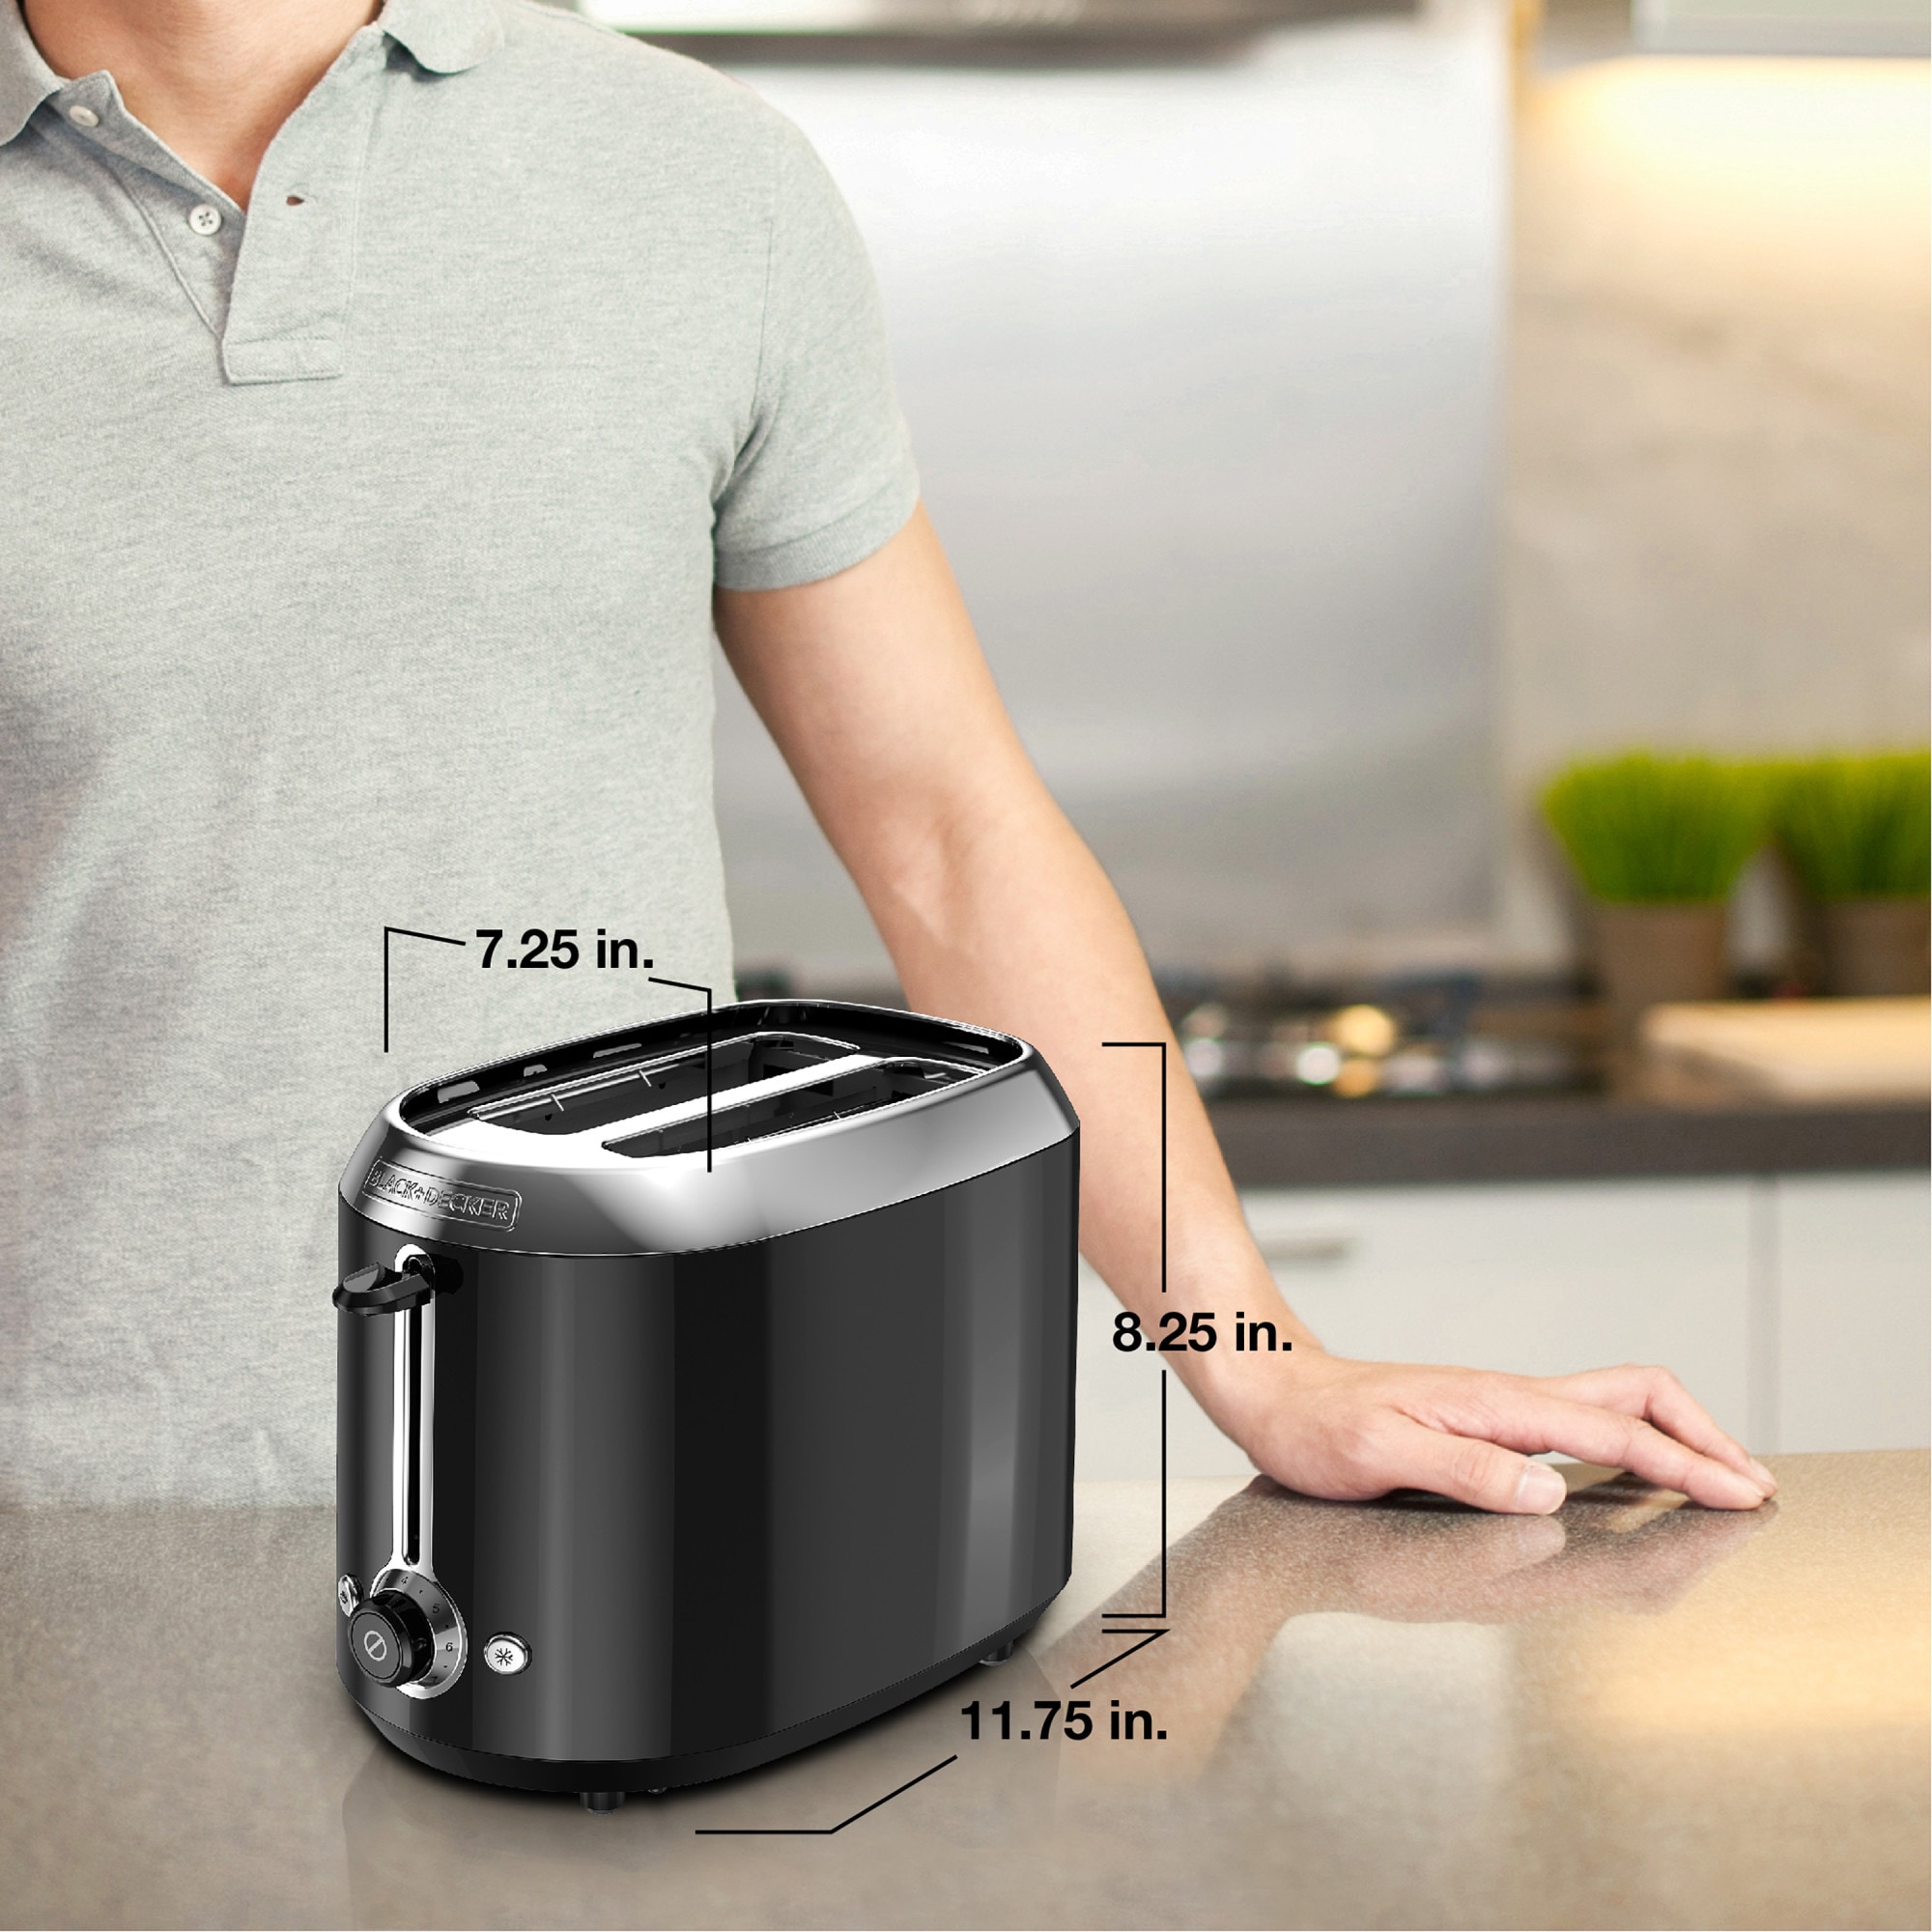  BLACK+DECKER TR1278B 2-Slice Toaster, Light Black: Home &  Kitchen